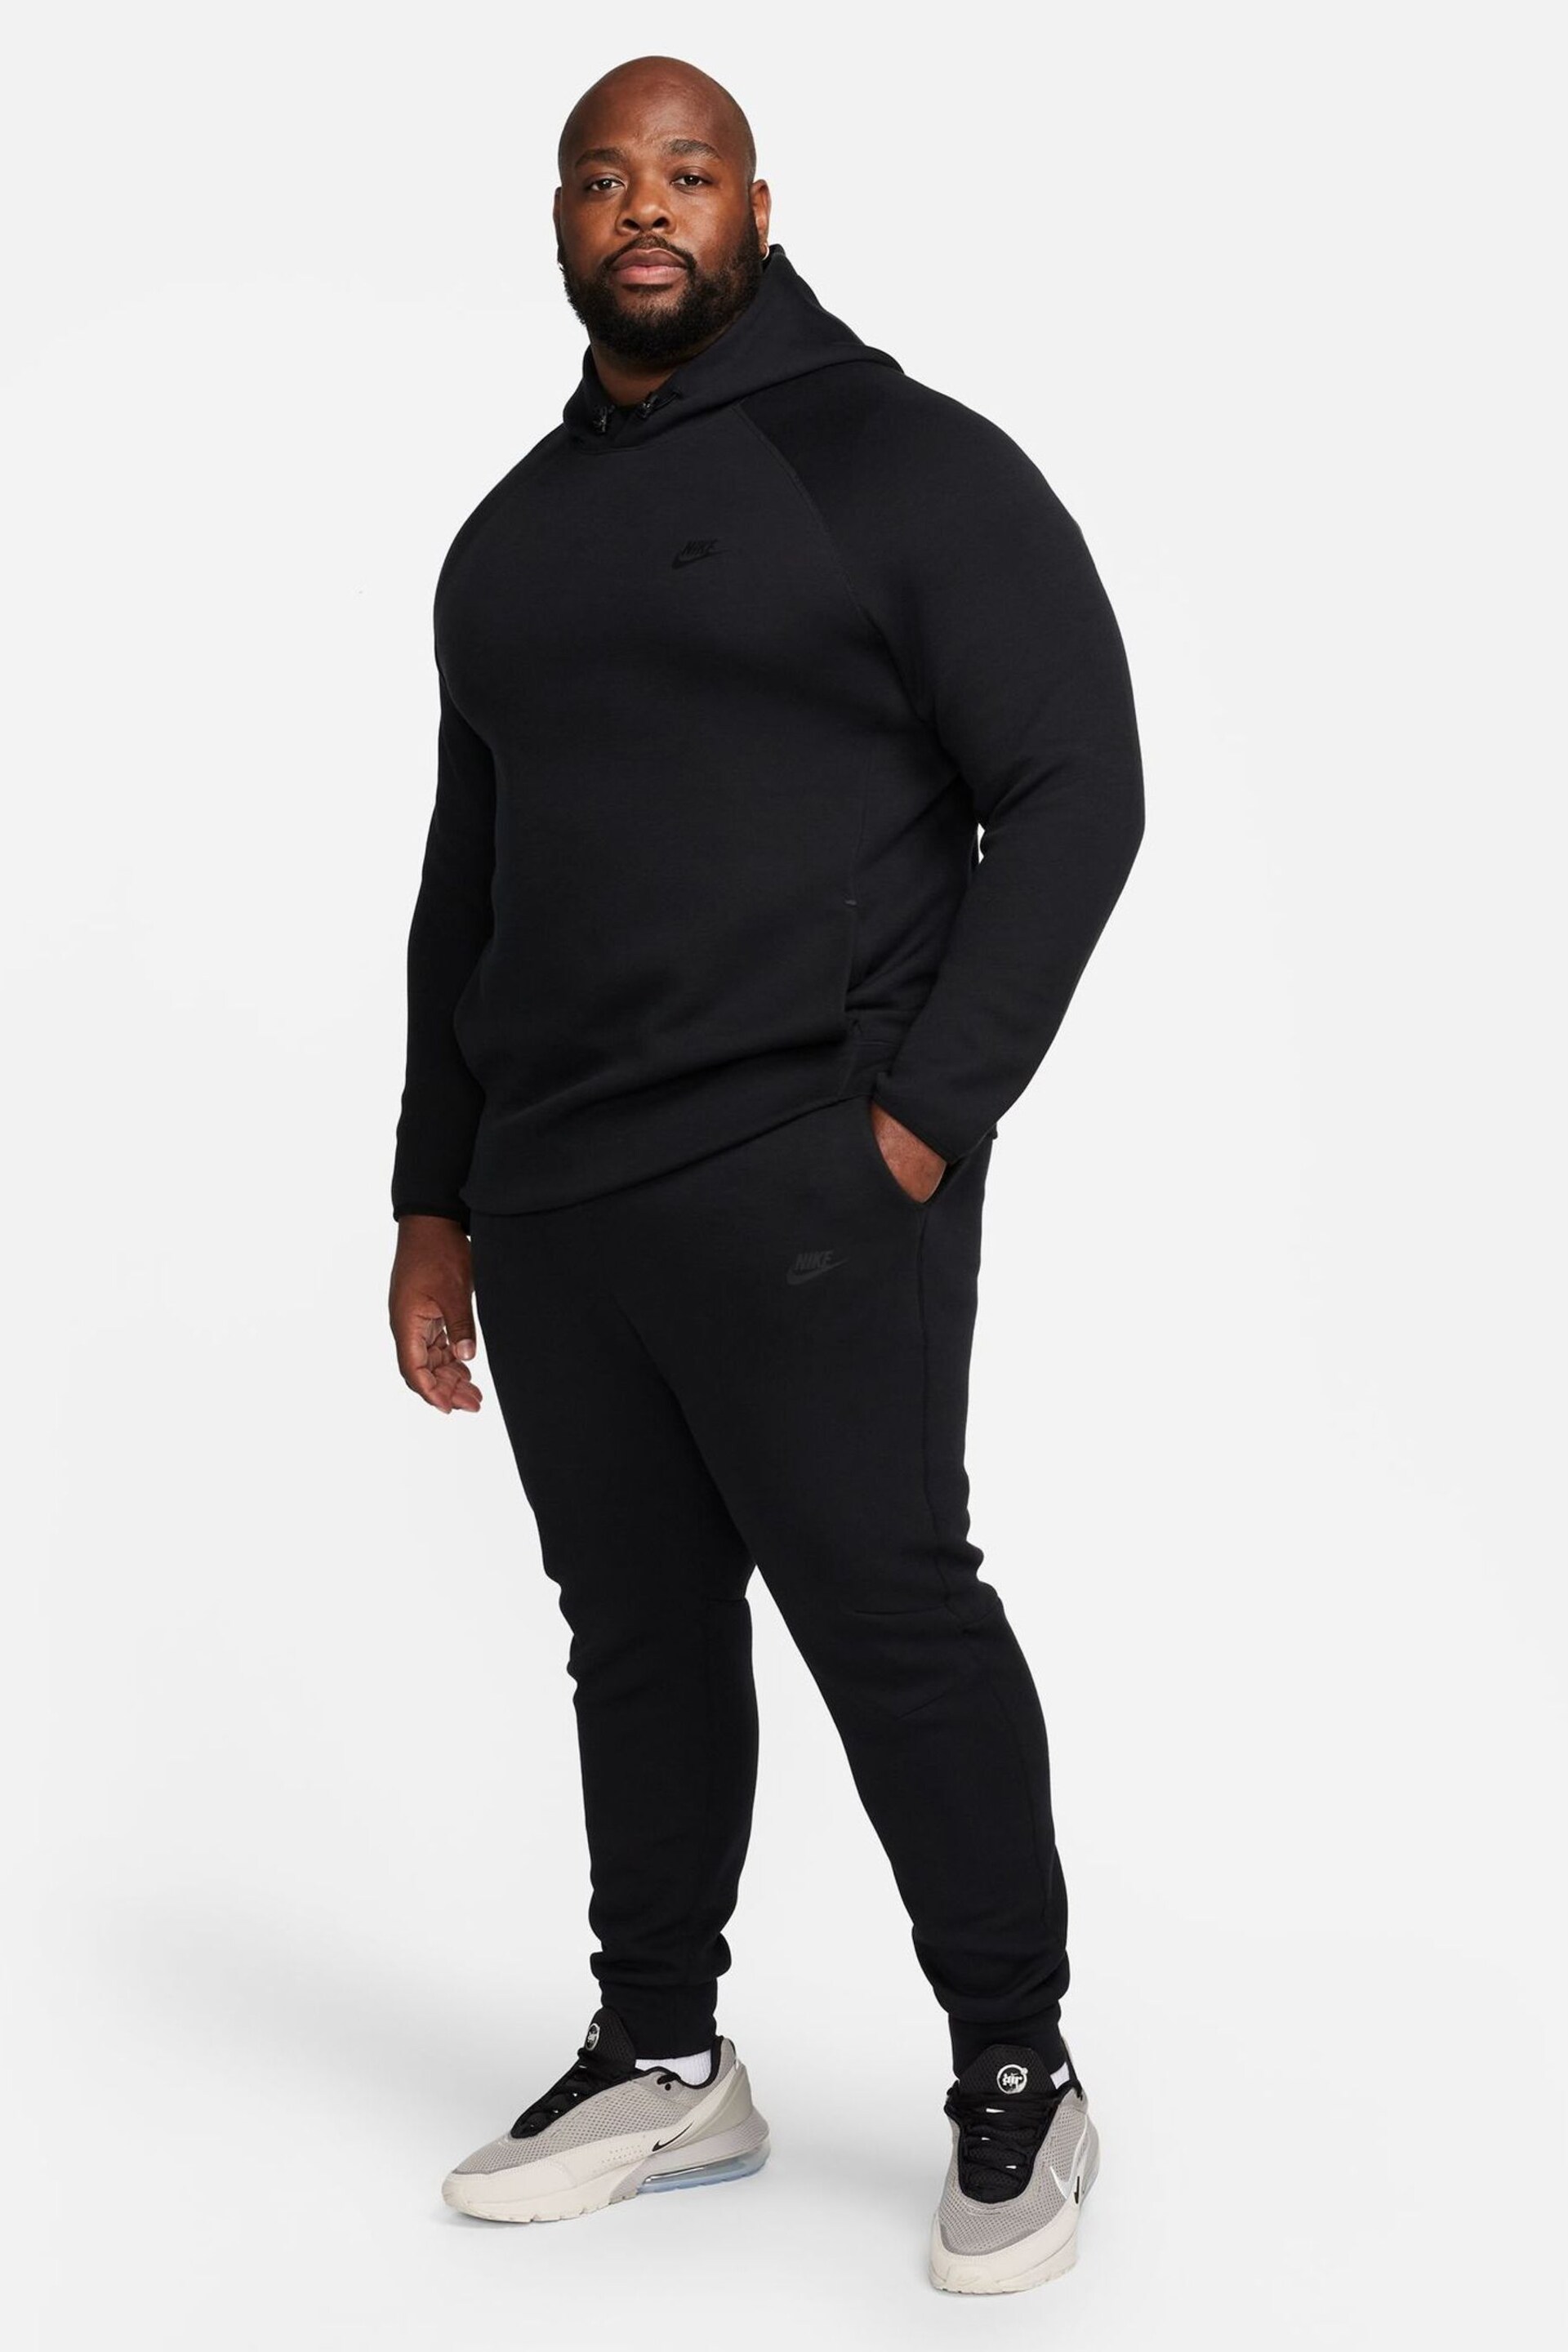 Nike Black Tech Fleece Pullover Hoodie - Image 6 of 16